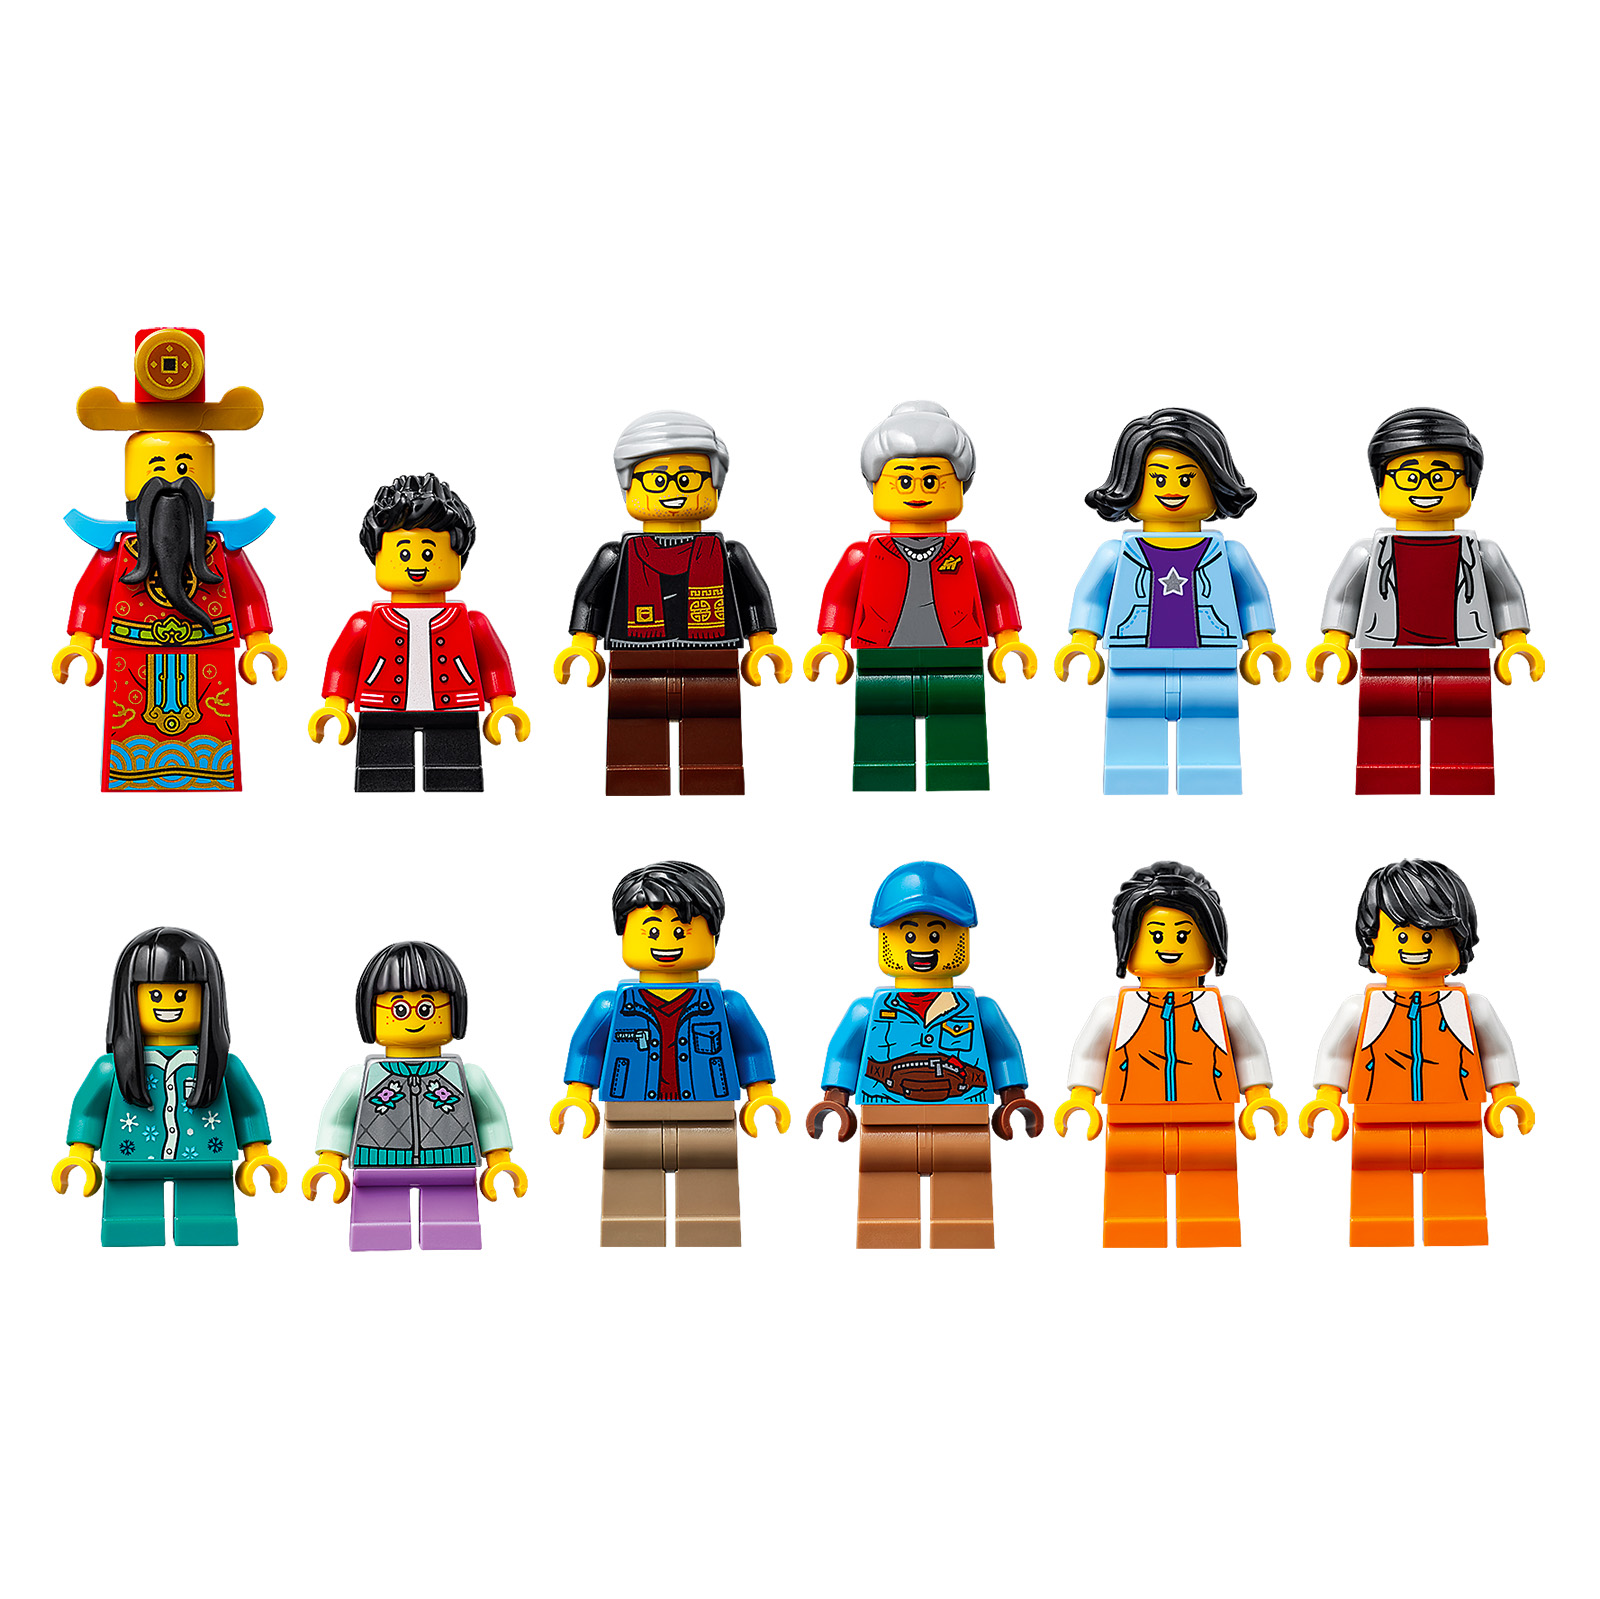 80105 - La fête du Nouvel An Chinois / Chinese New Year Temple Fair - Ma  collection de LEGO